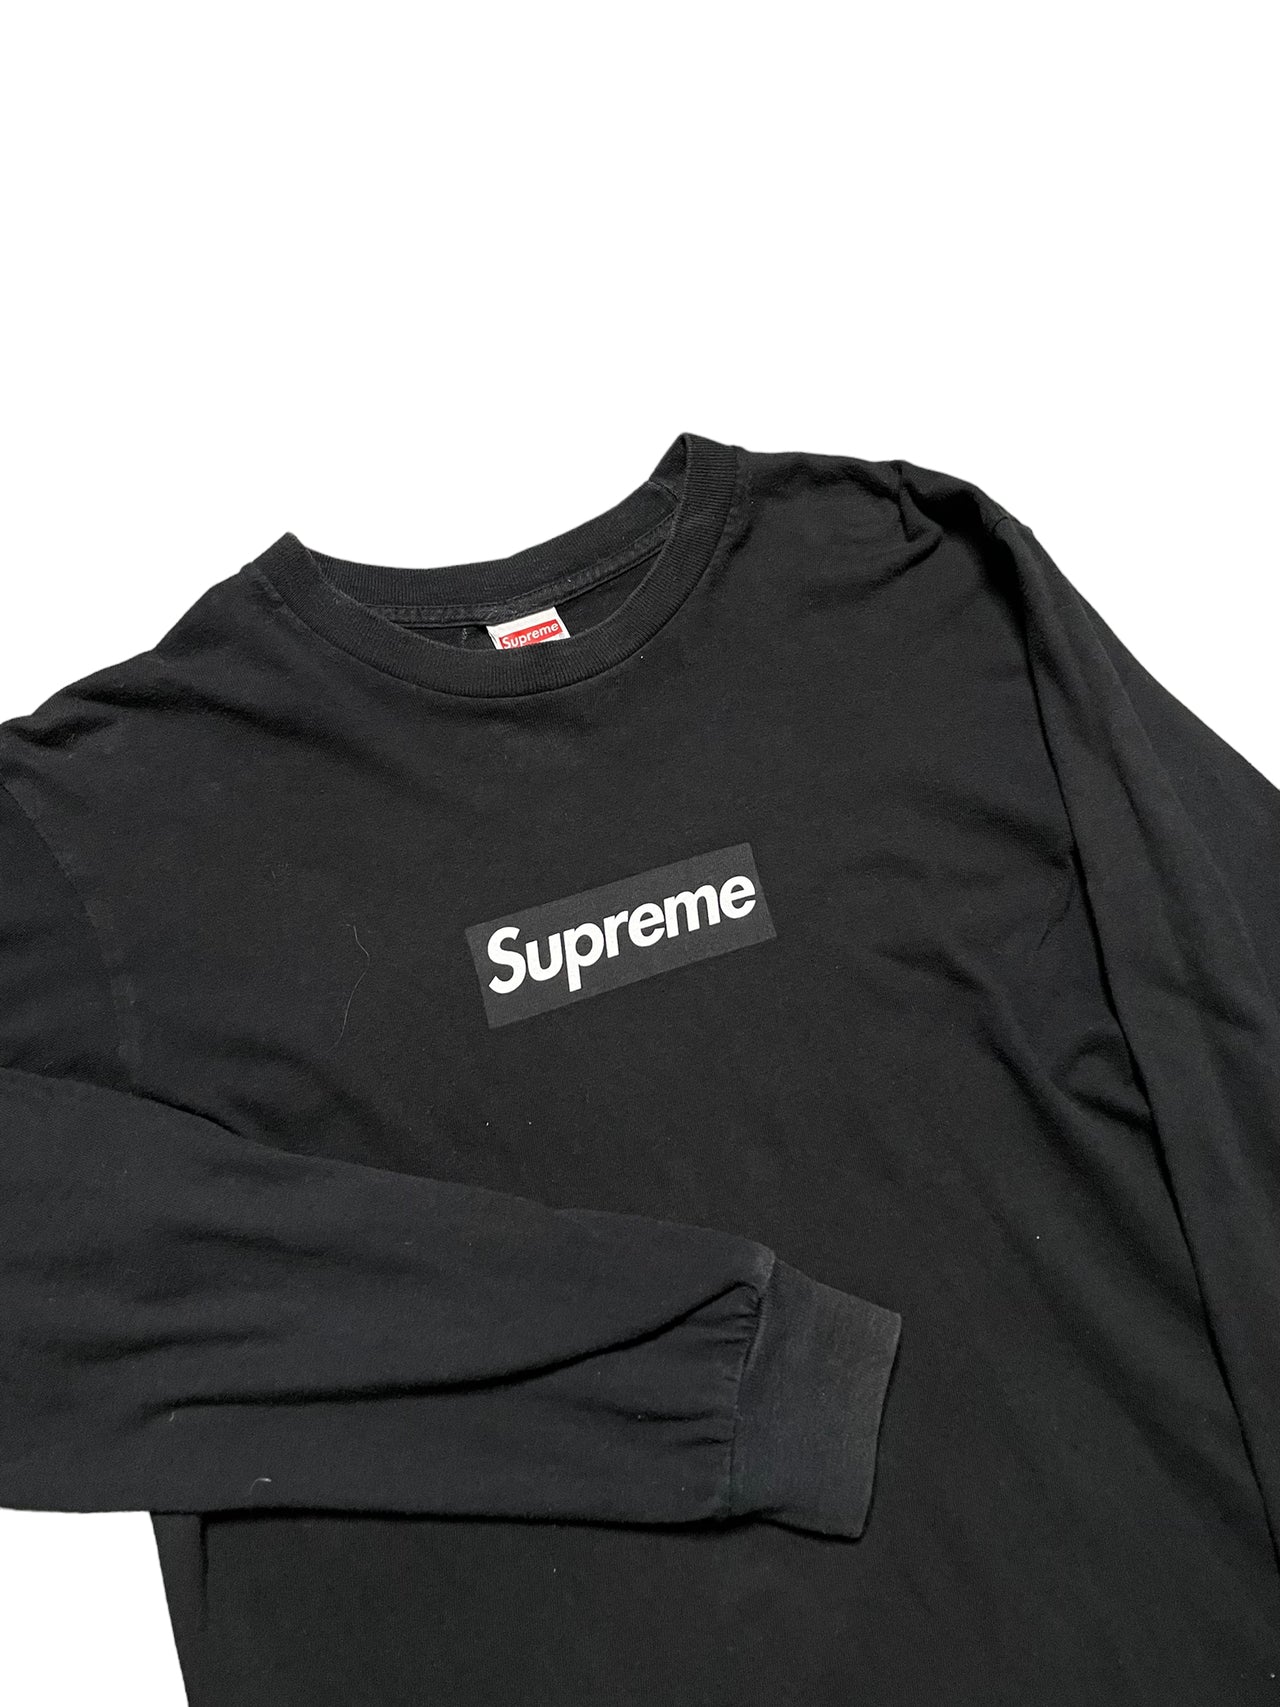 Supreme Box Logo FW|20 Longsleeve T-Shirt